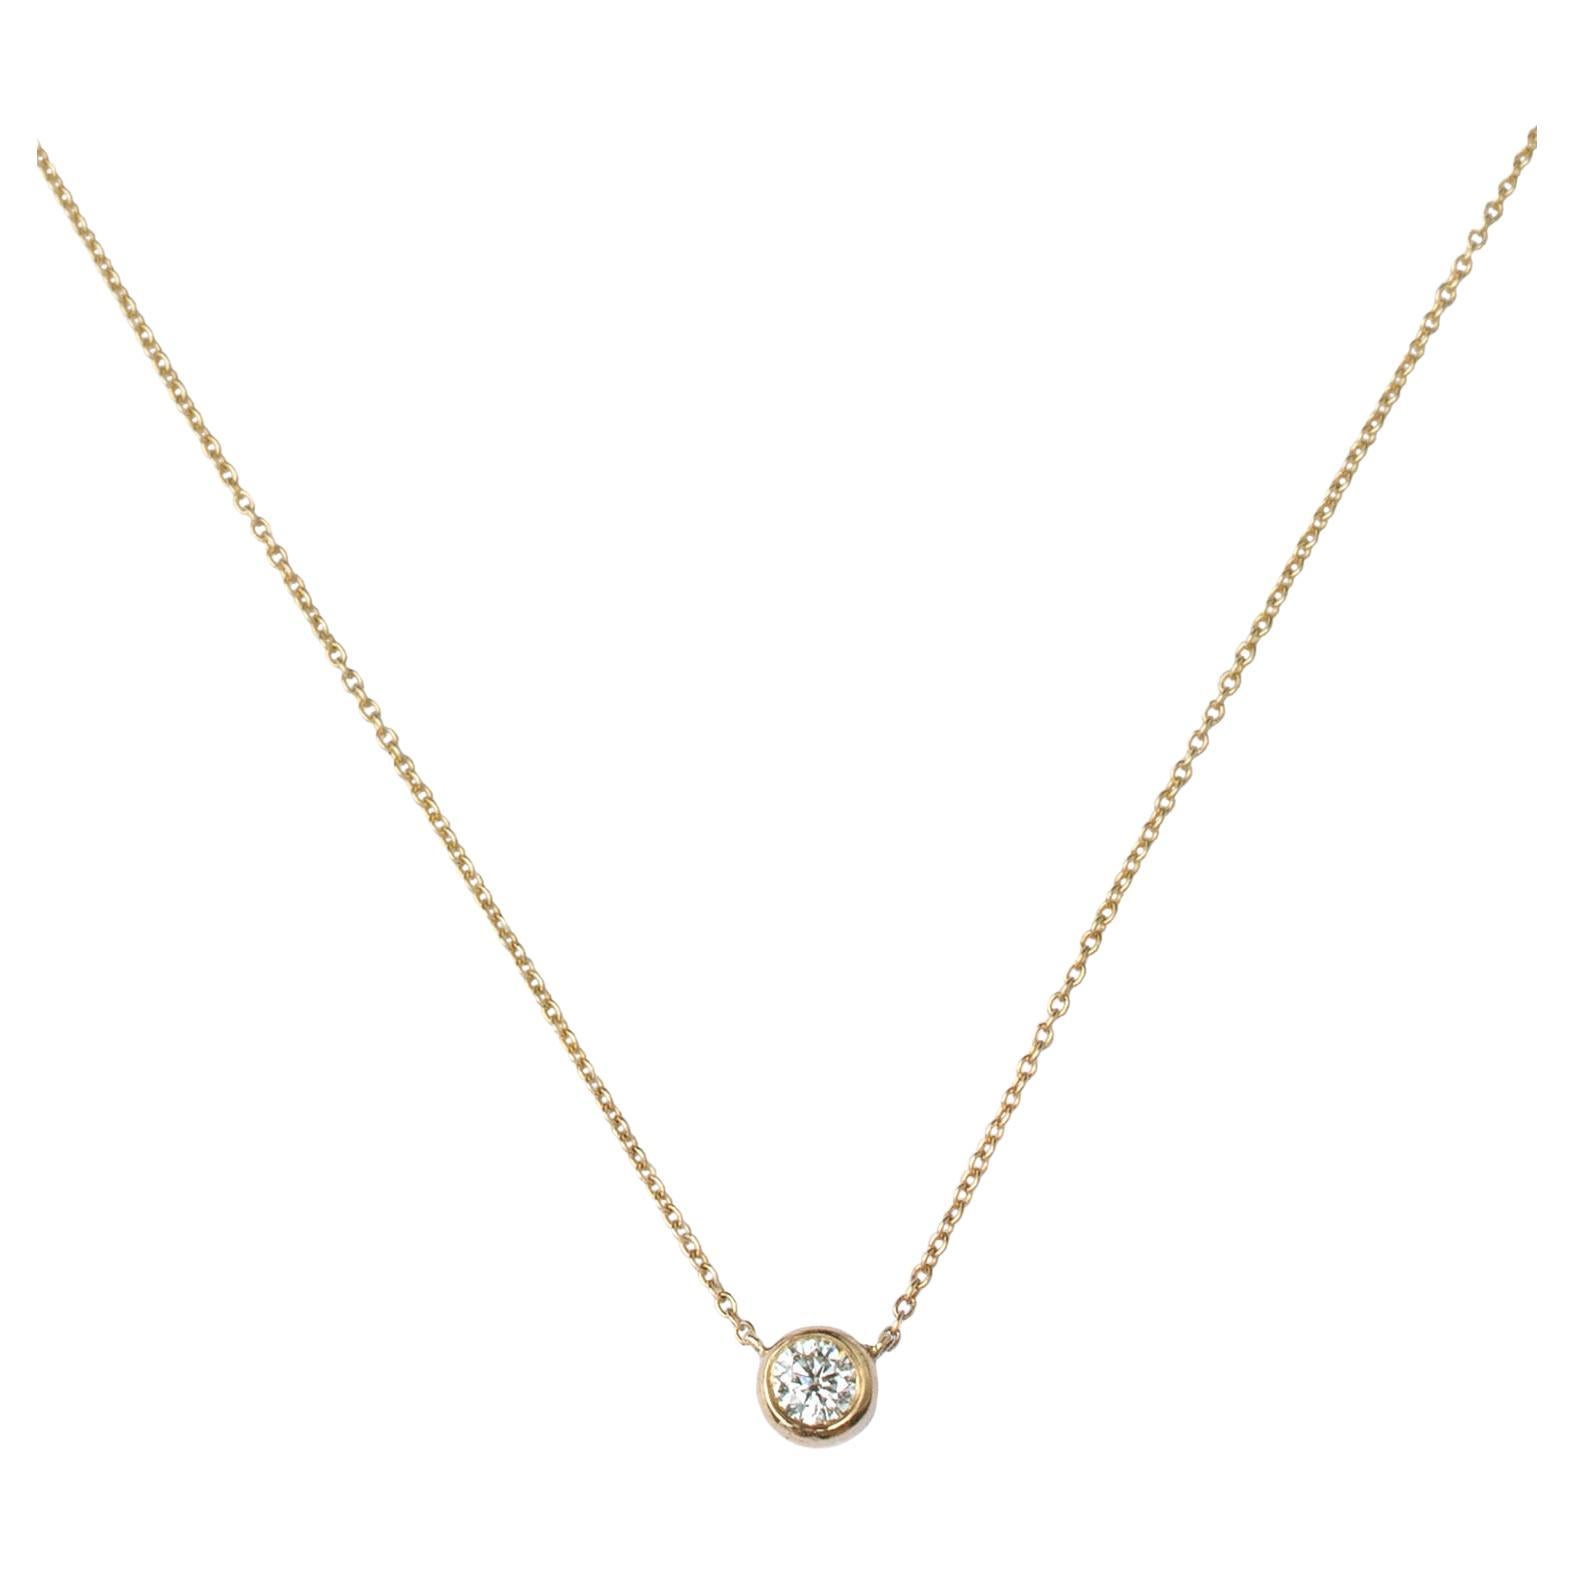 14 Karat Gold Conflict Free Diamond Solitaire Choker Necklace by Mon Pilar